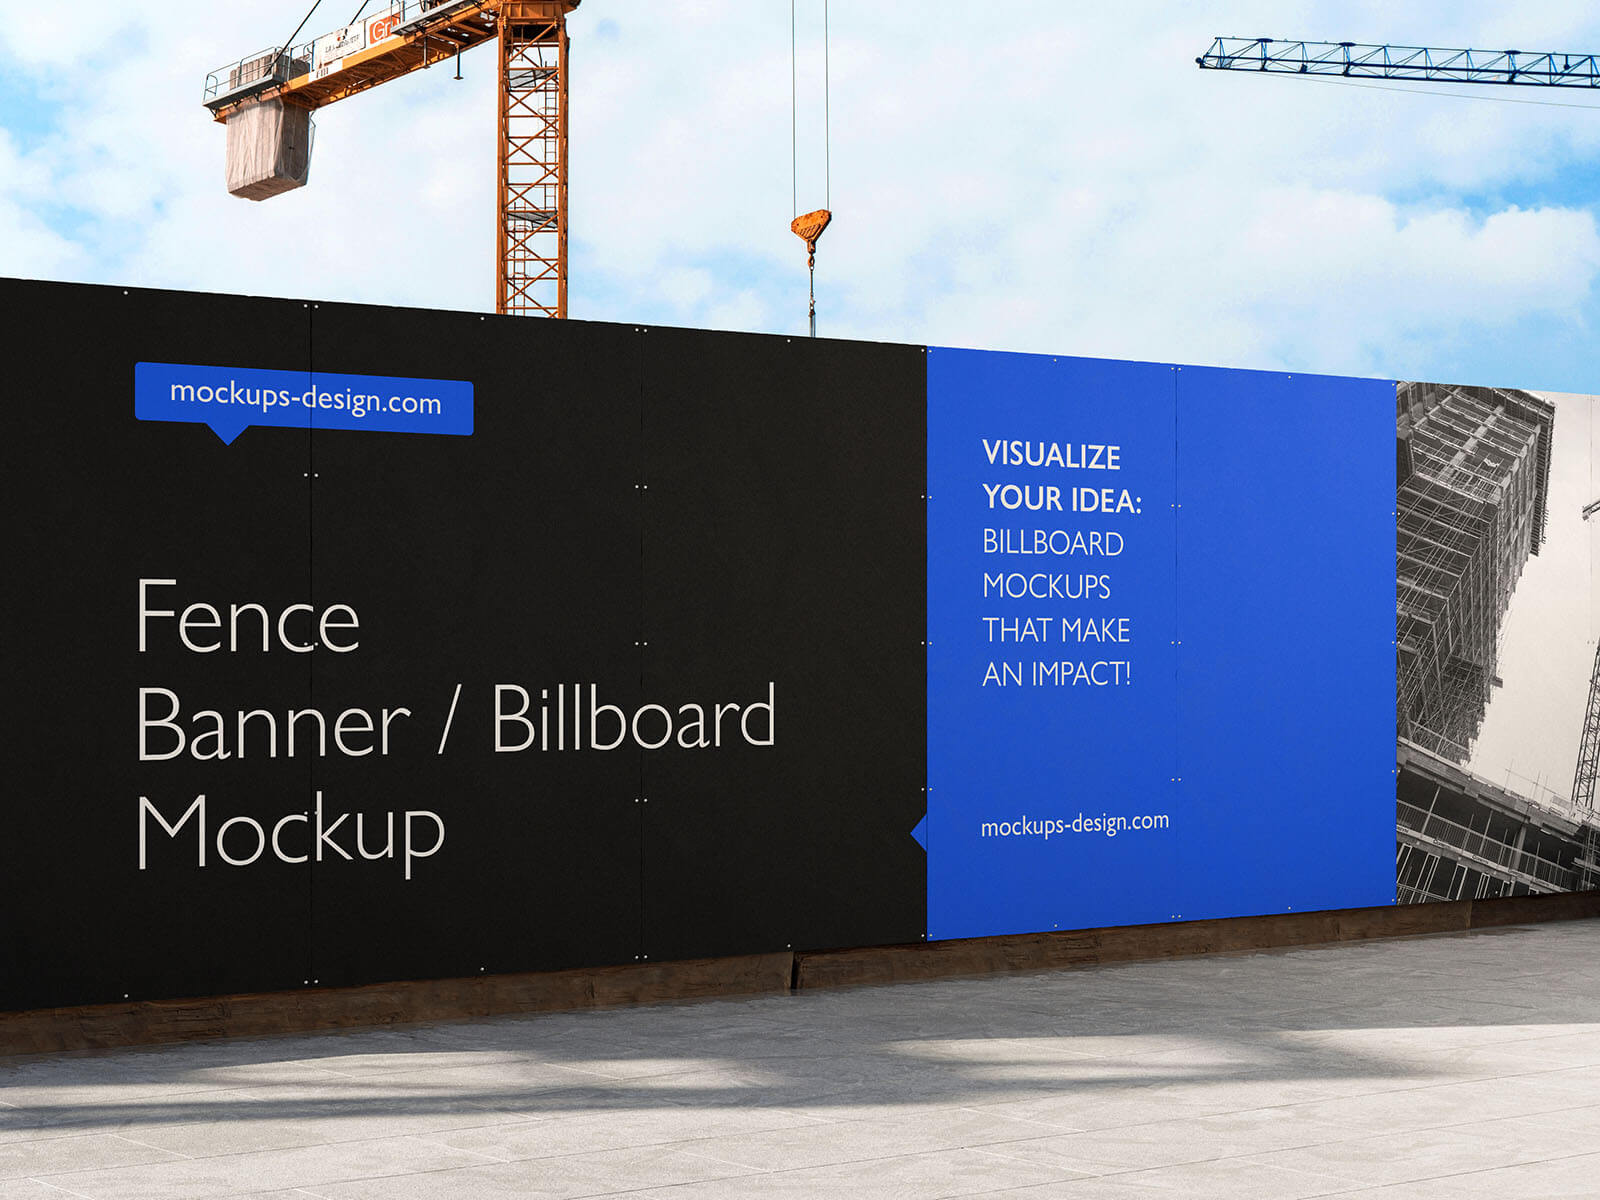 Free Boundary Wall Fence Banner / Billboard Mockup PSD Set